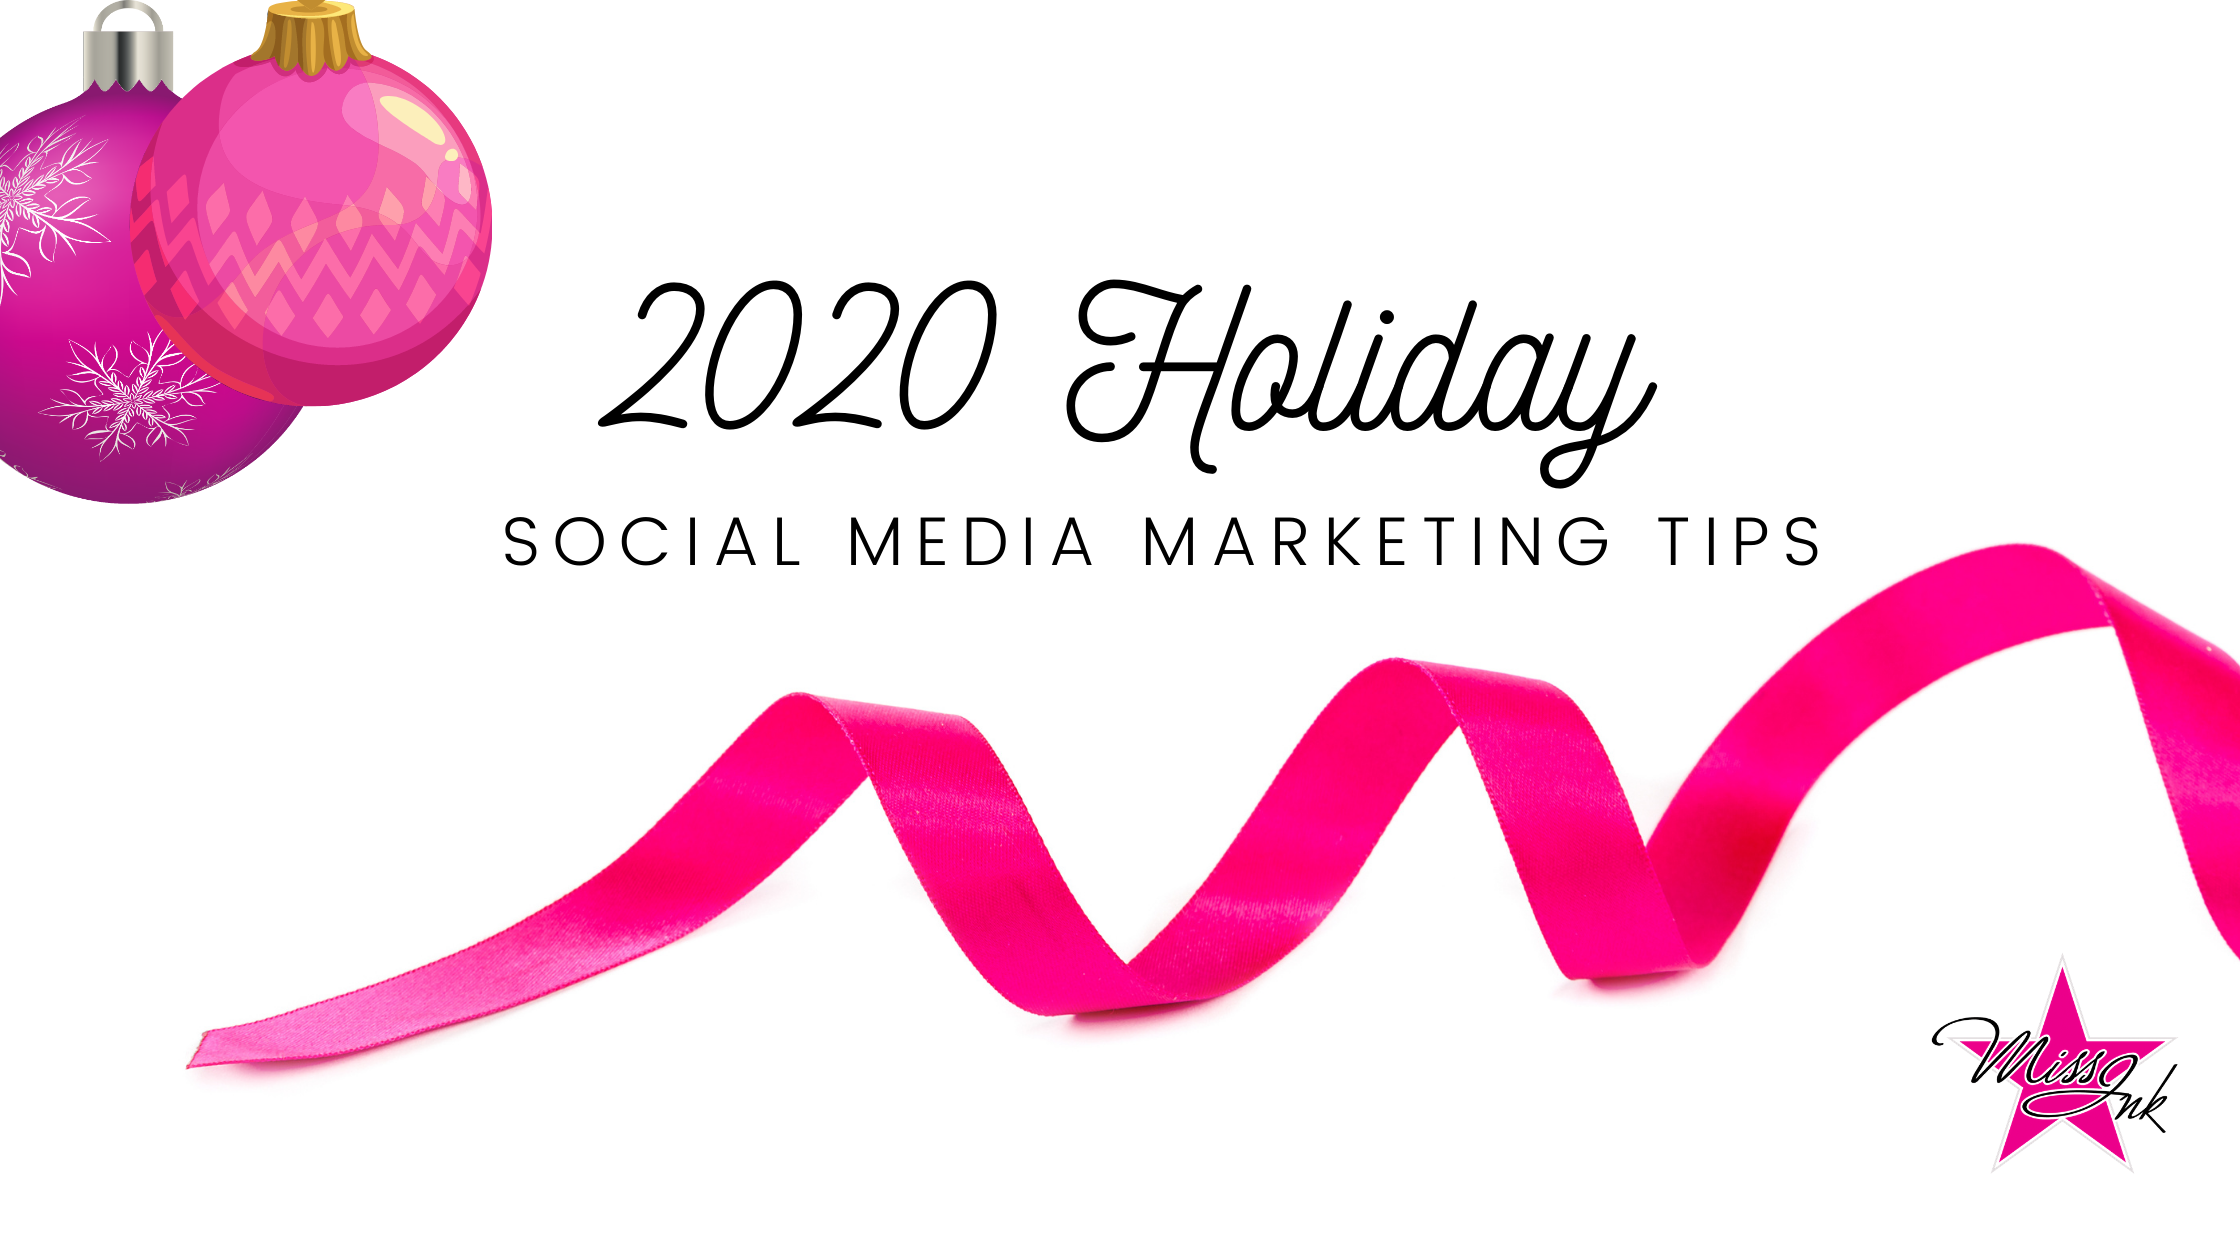 6 Holiday Social Media Marketing Tips for 2020